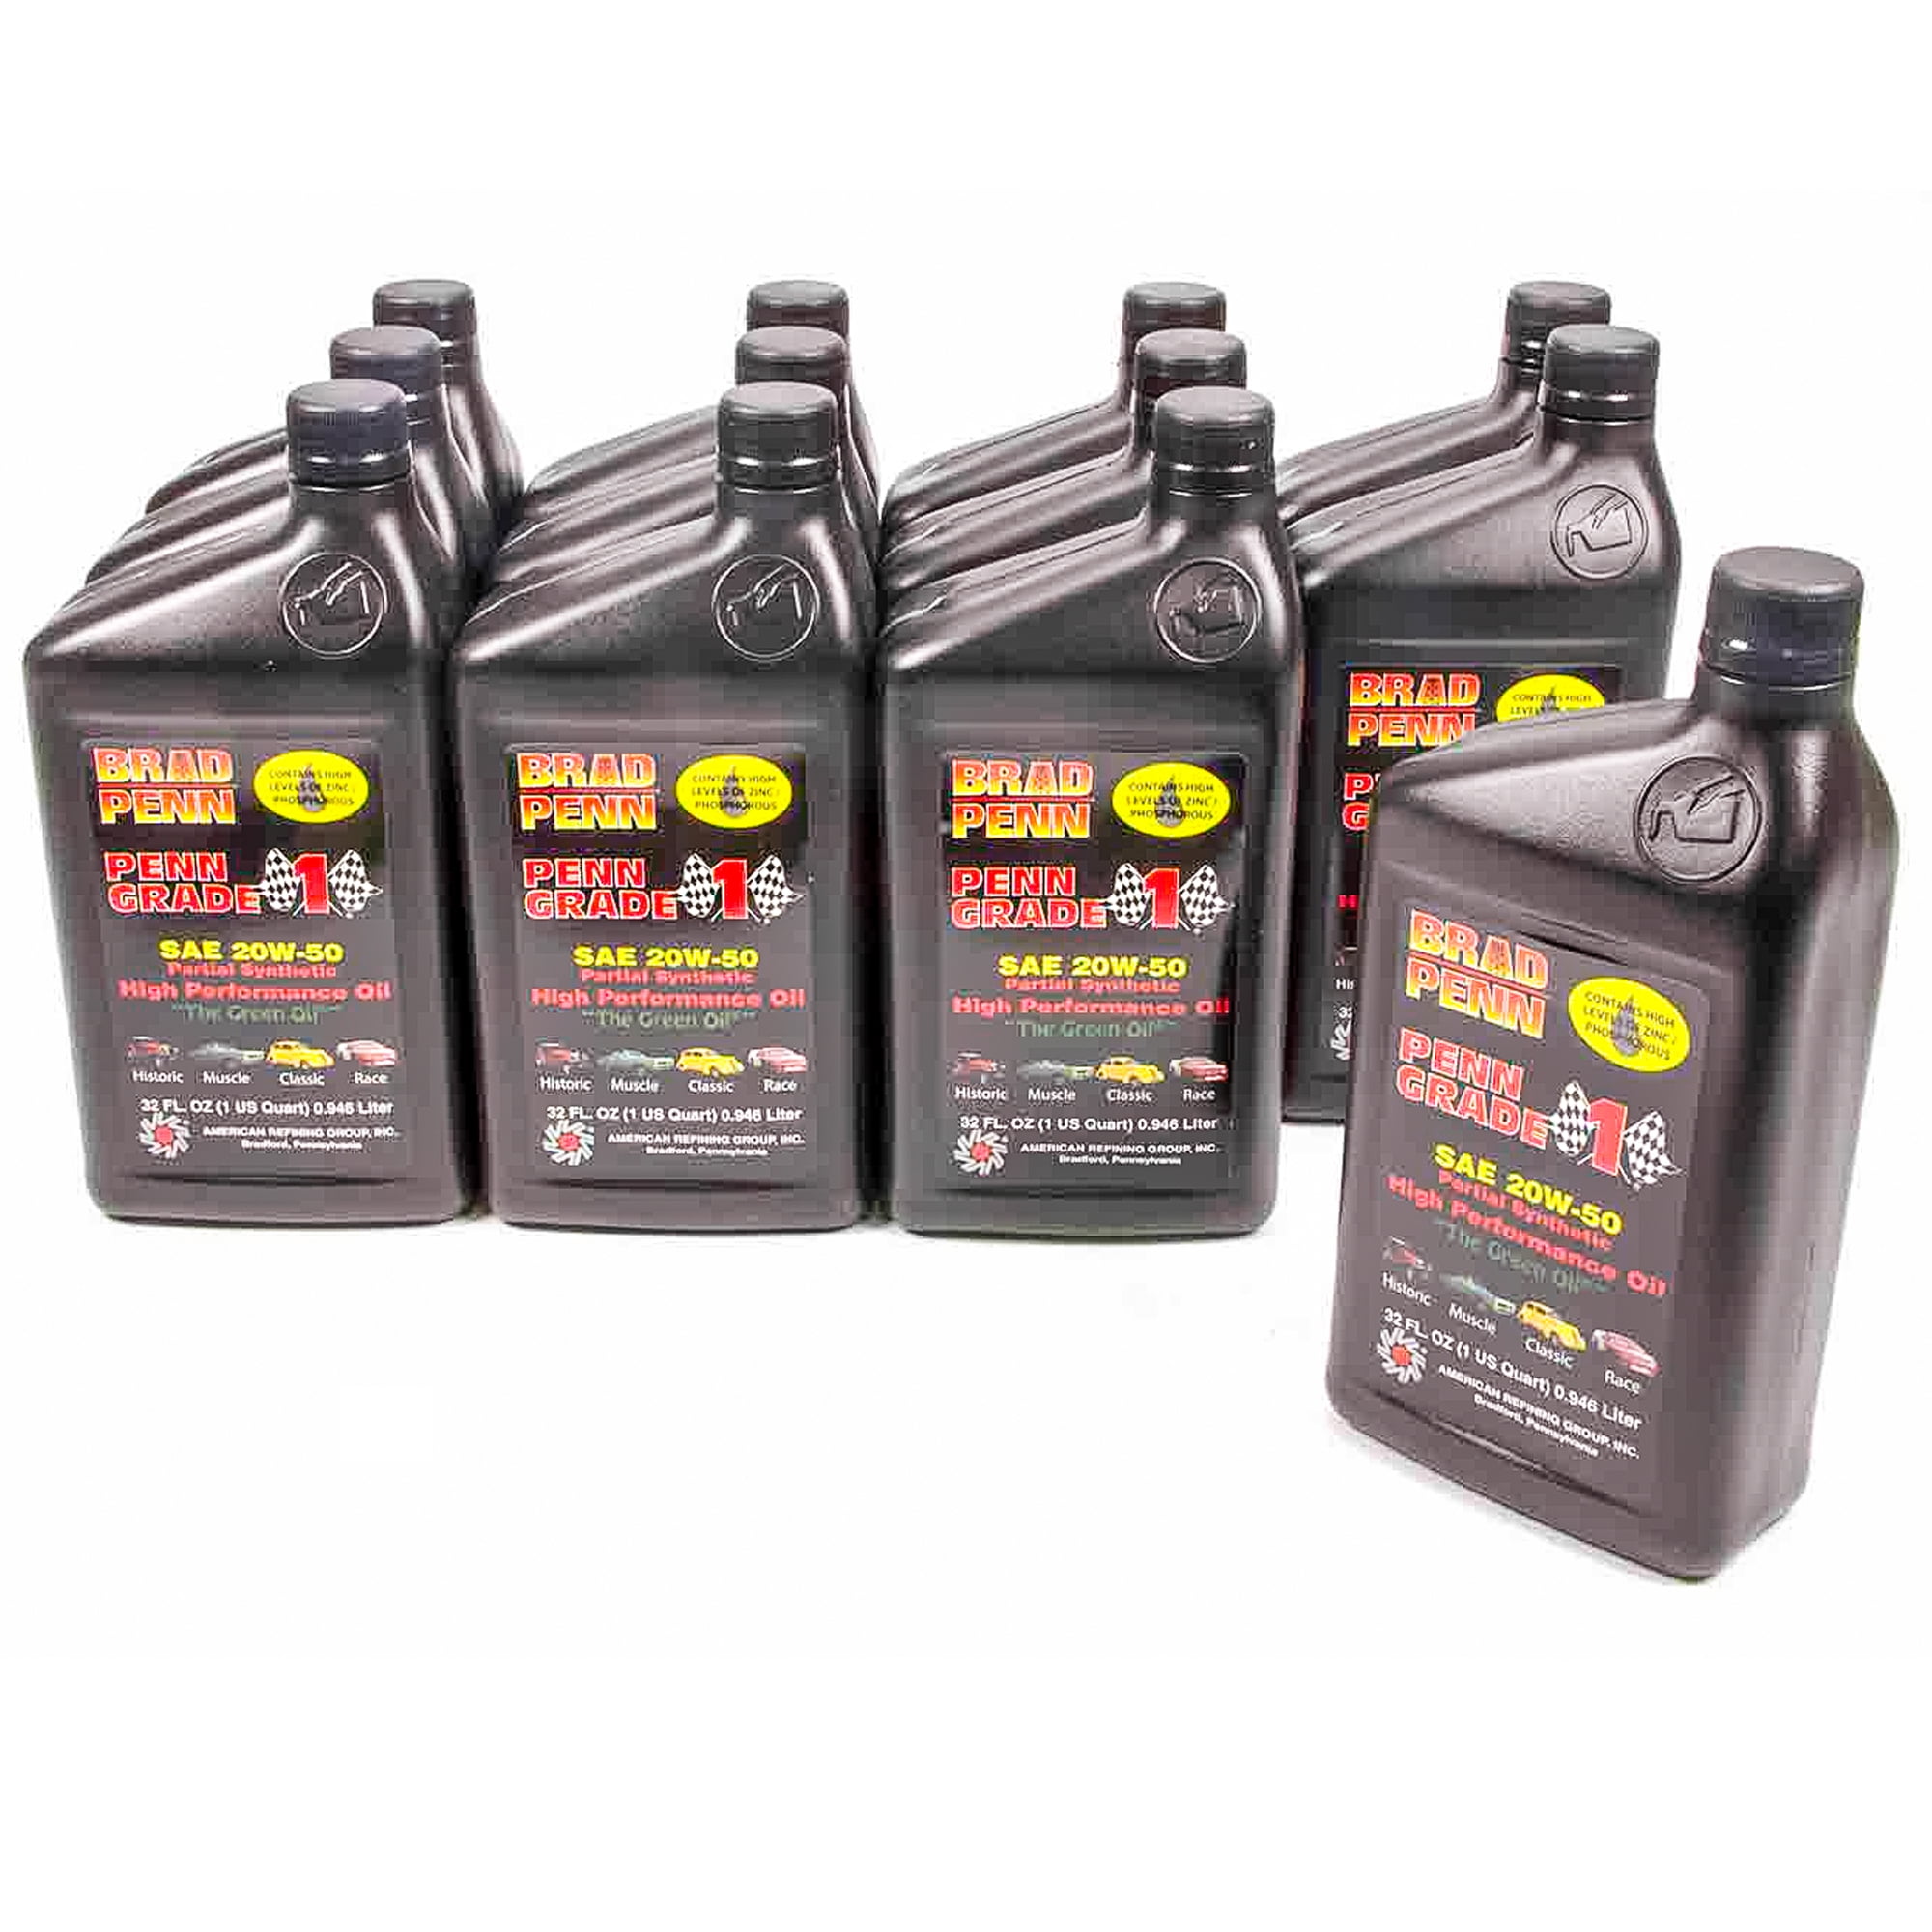 Brad Penn Oil 009-7119-12PK 20W-50 Partial Synthetic Oil 12 pack - Walmart.com